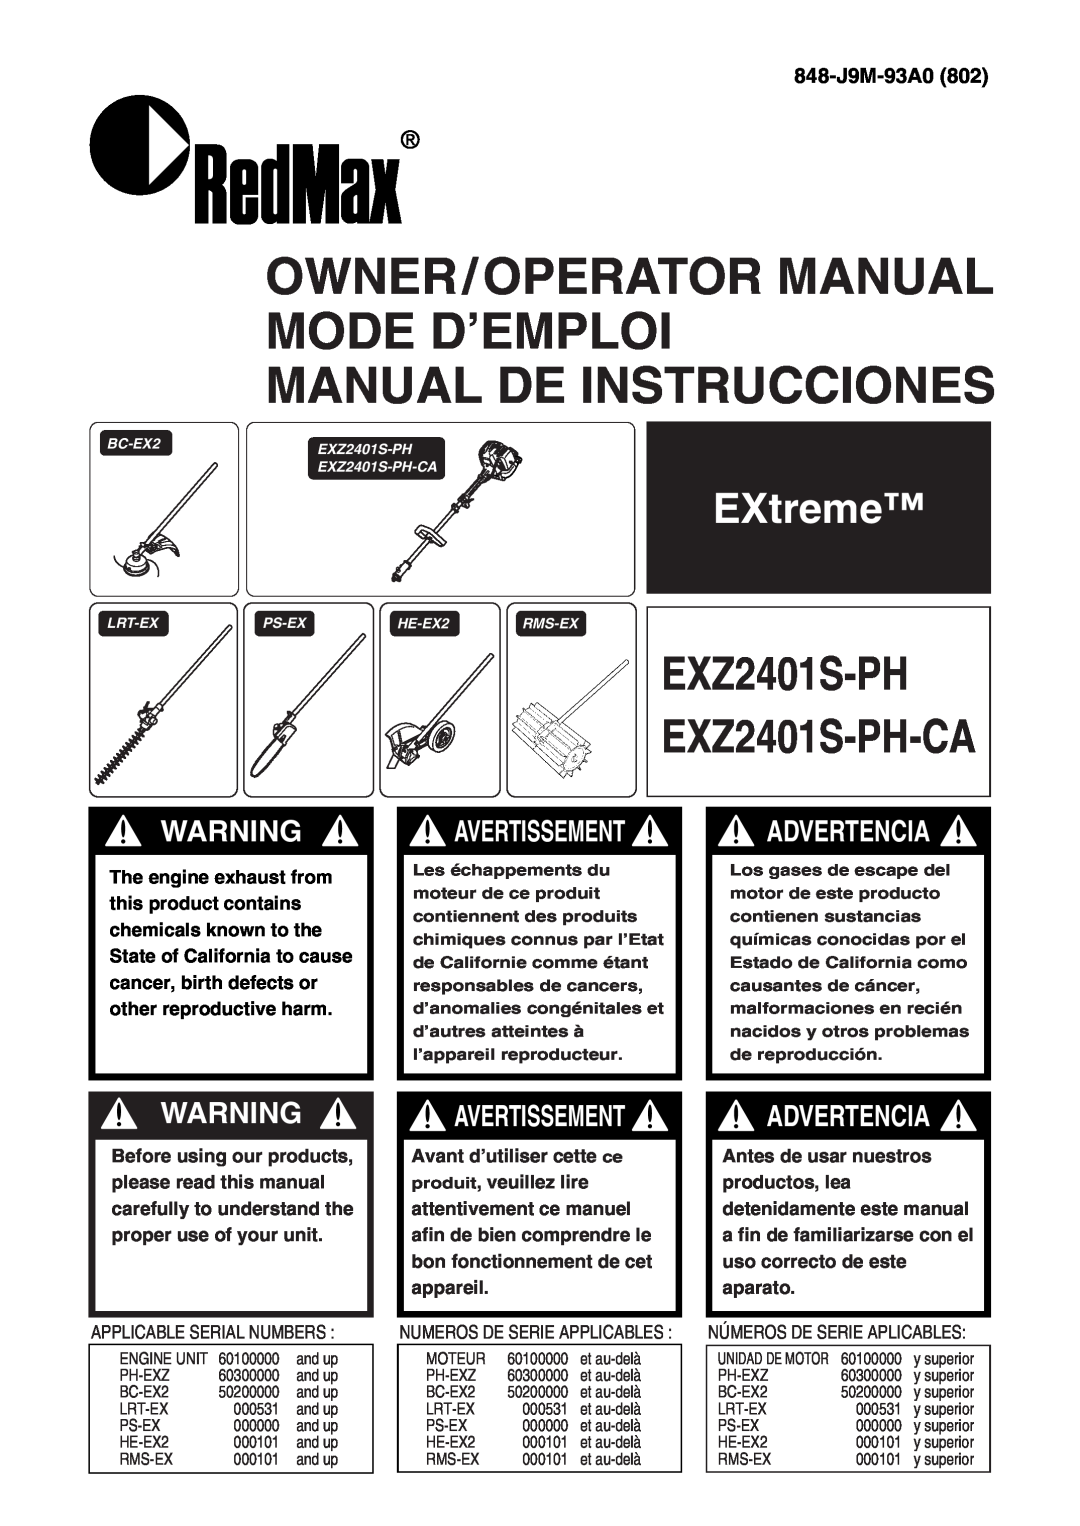 RedMax manual EXtreme, EXZ2401S-PH EXZ2401S-PH-CA, 848-J9M-93A0, Advertencia, Avertissement 